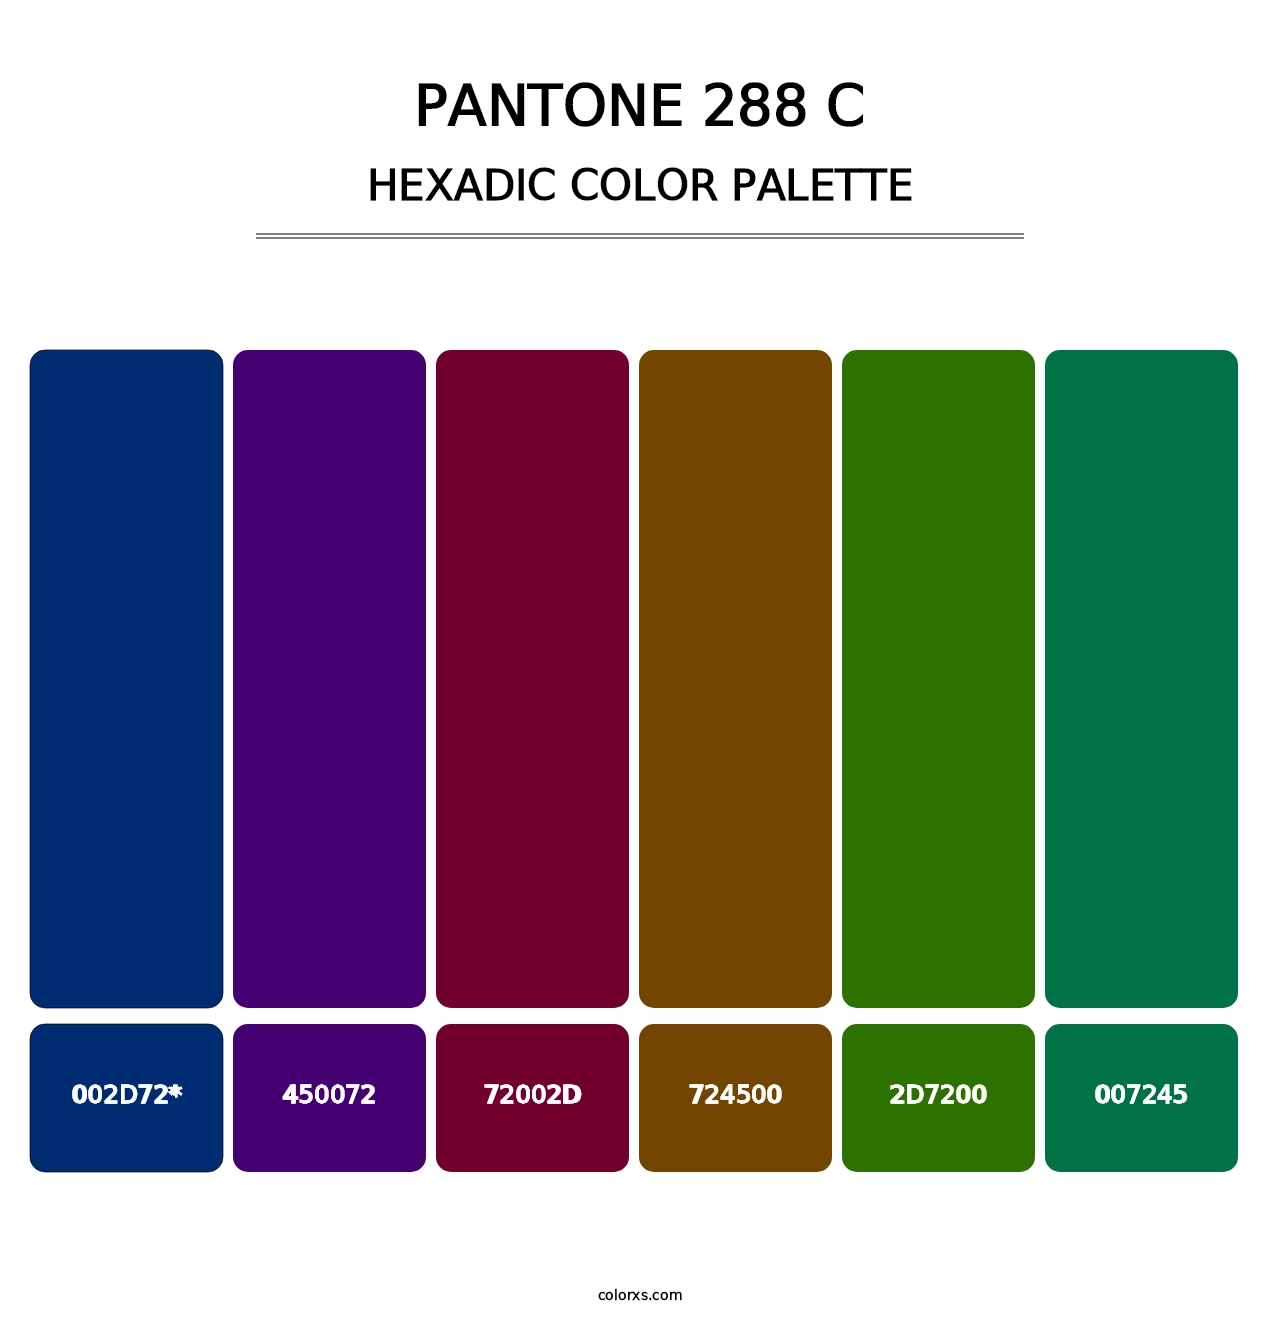 PANTONE 288 C - Hexadic Color Palette